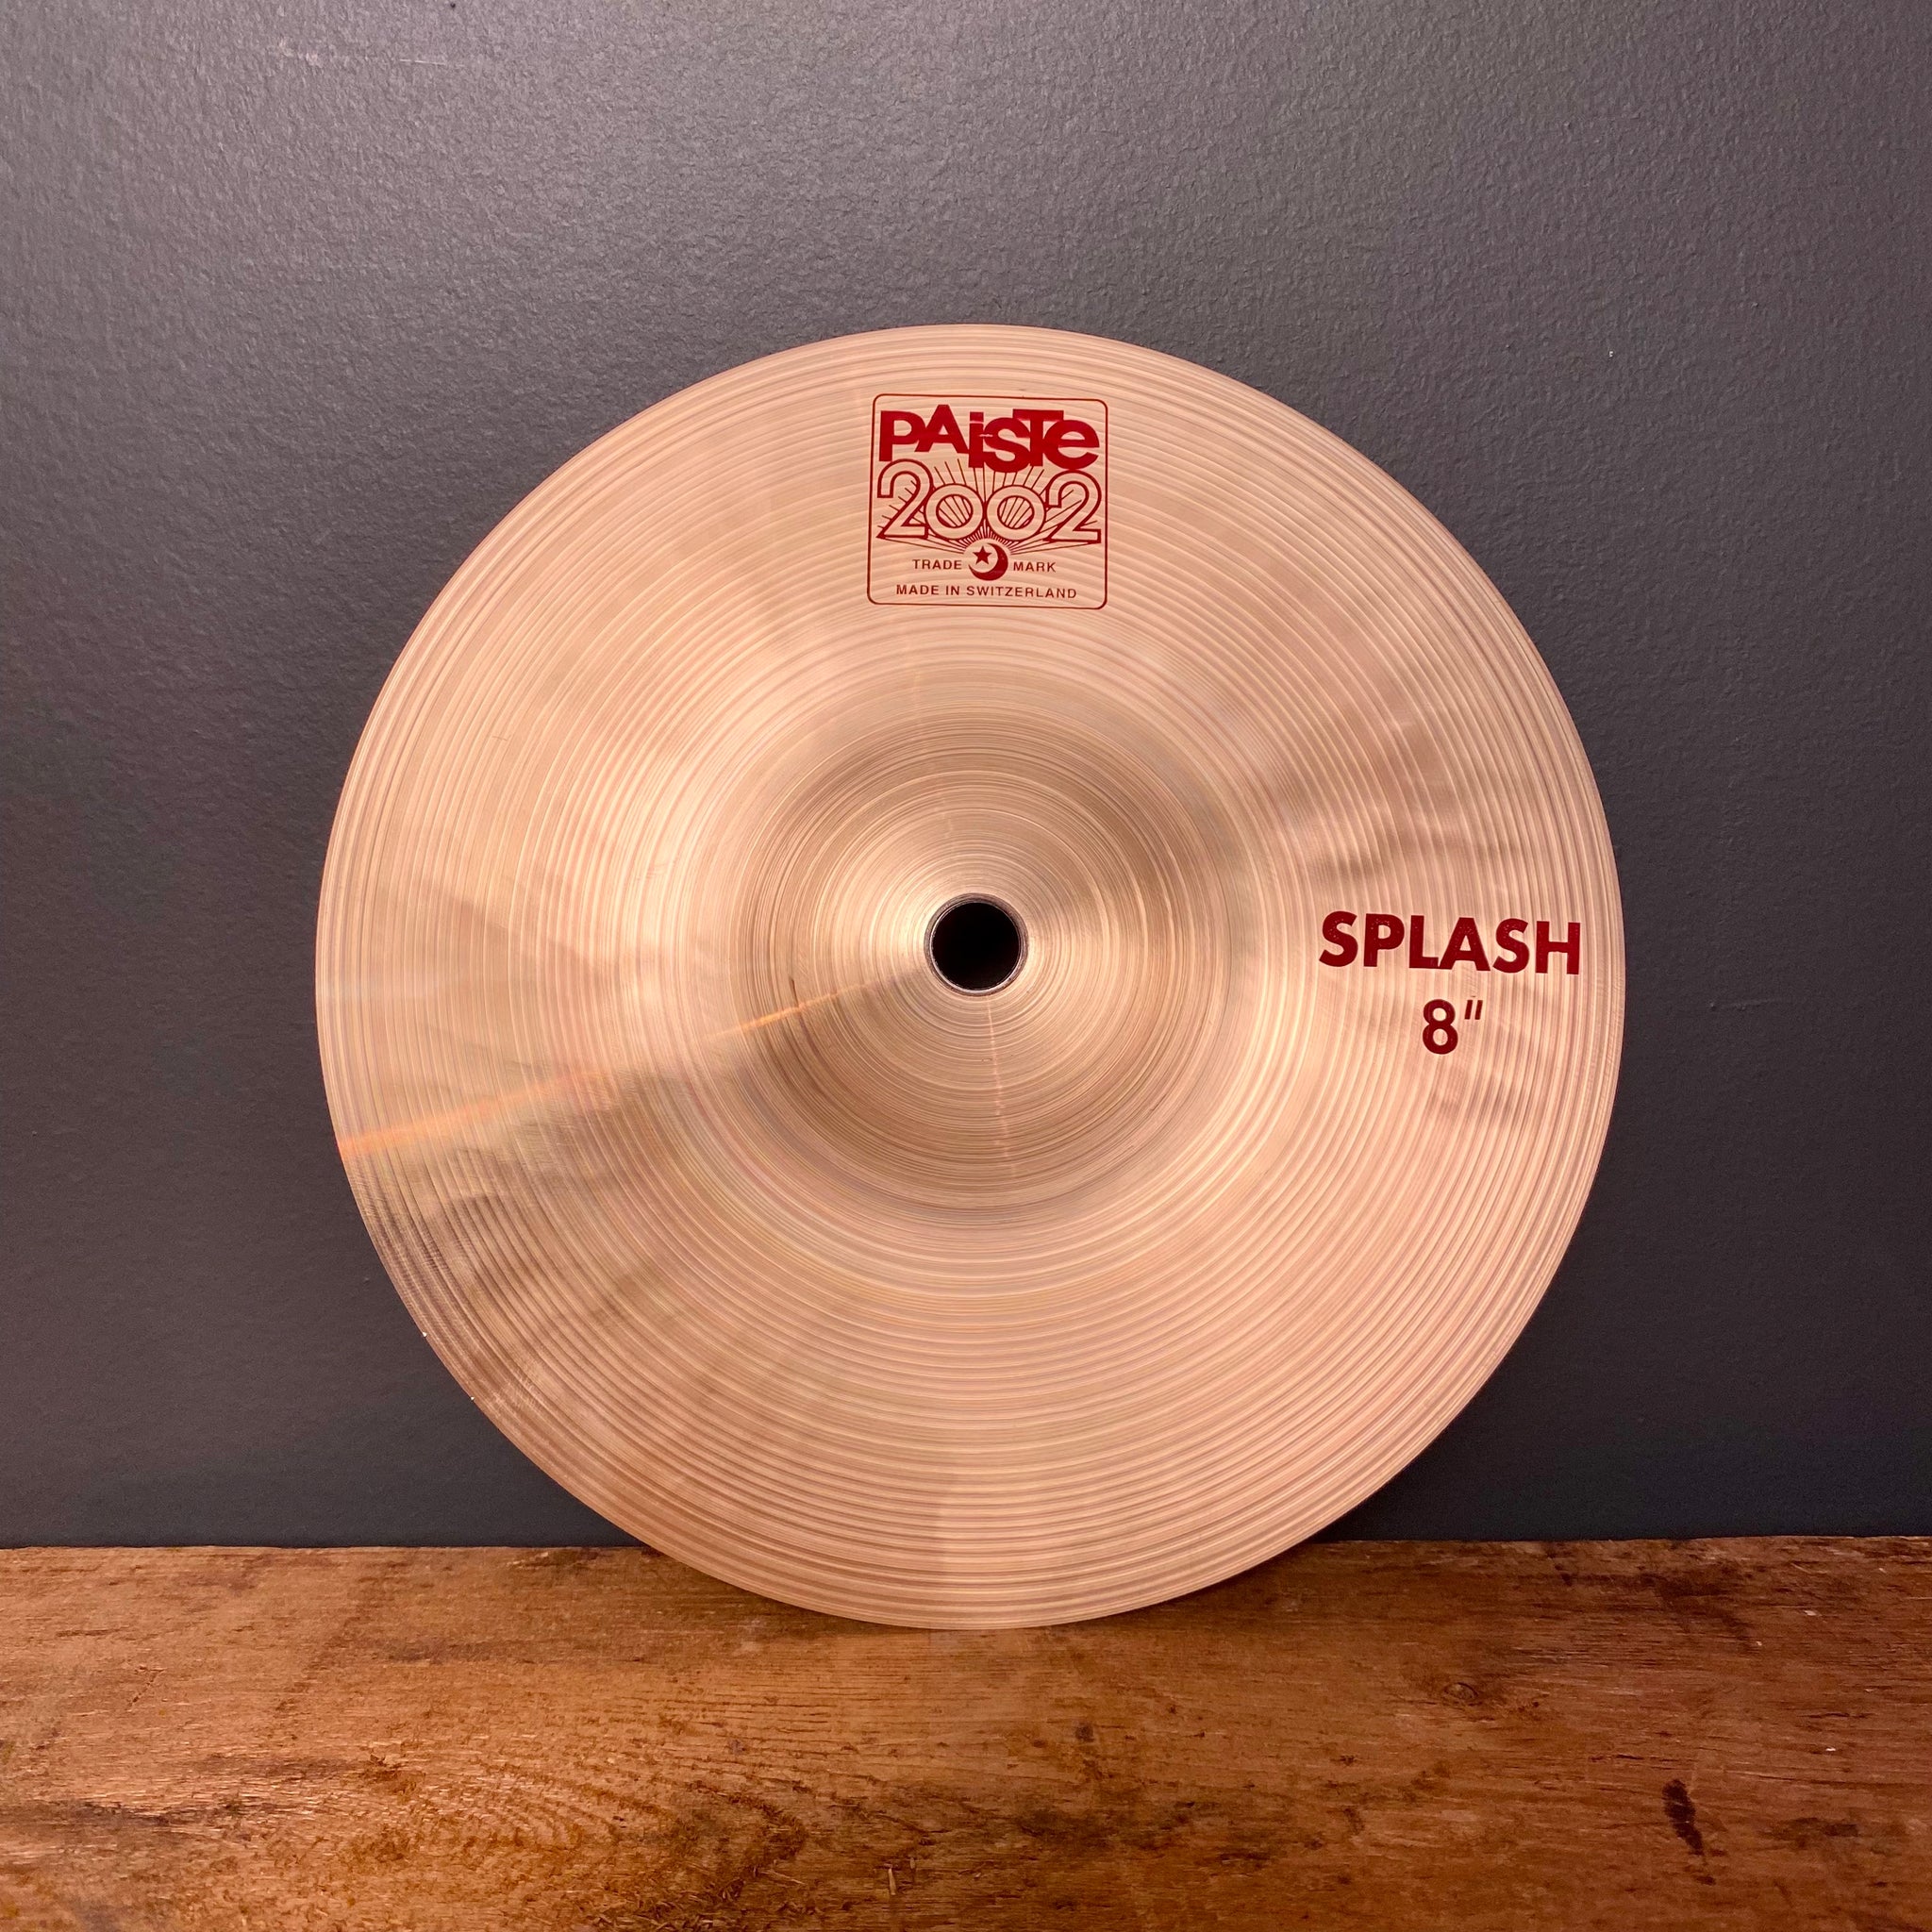 NEW Paiste 8" 2002 Splash Cymbal - 122g